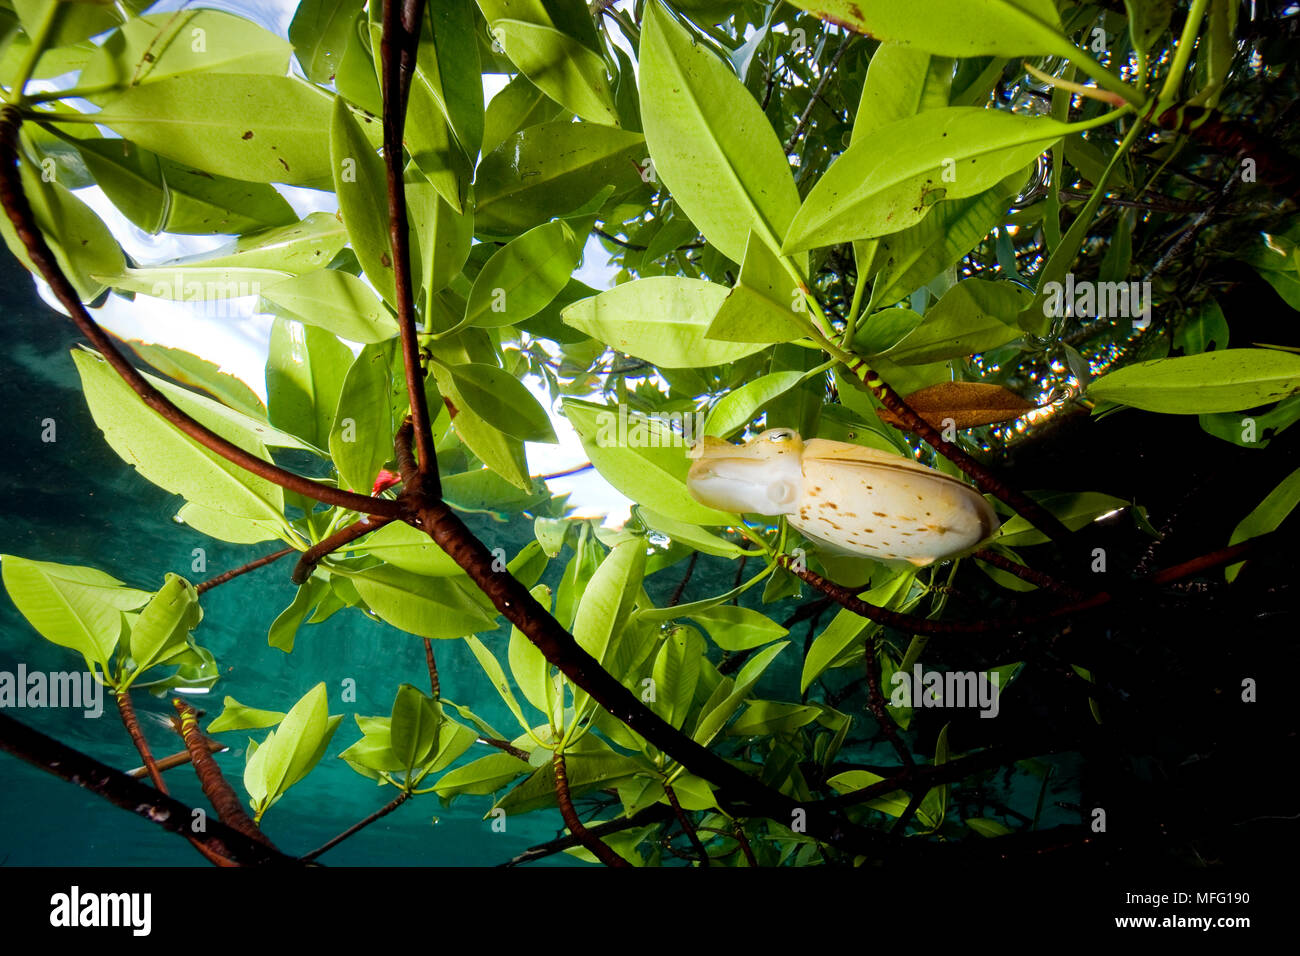 Broadclub cuttlefish, Sepia latimanus on the surface between mangrove's leaves, dive site: exploratory dive, Blue water mangrove, Raja Ampat, Irian Ja Stock Photo